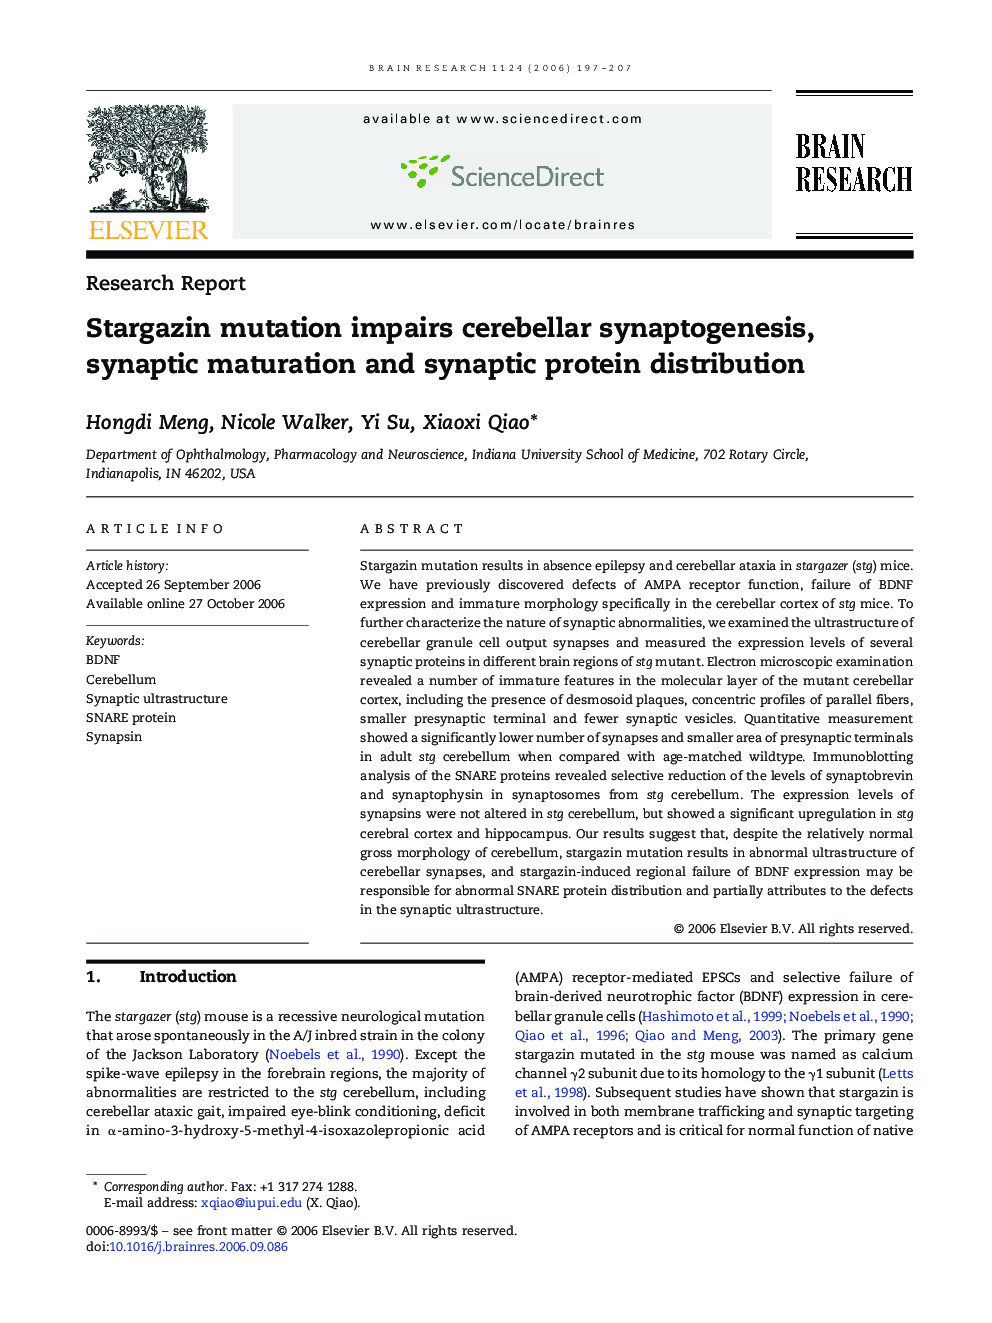 Stargazin mutation impairs cerebellar synaptogenesis, synaptic maturation and synaptic protein distribution